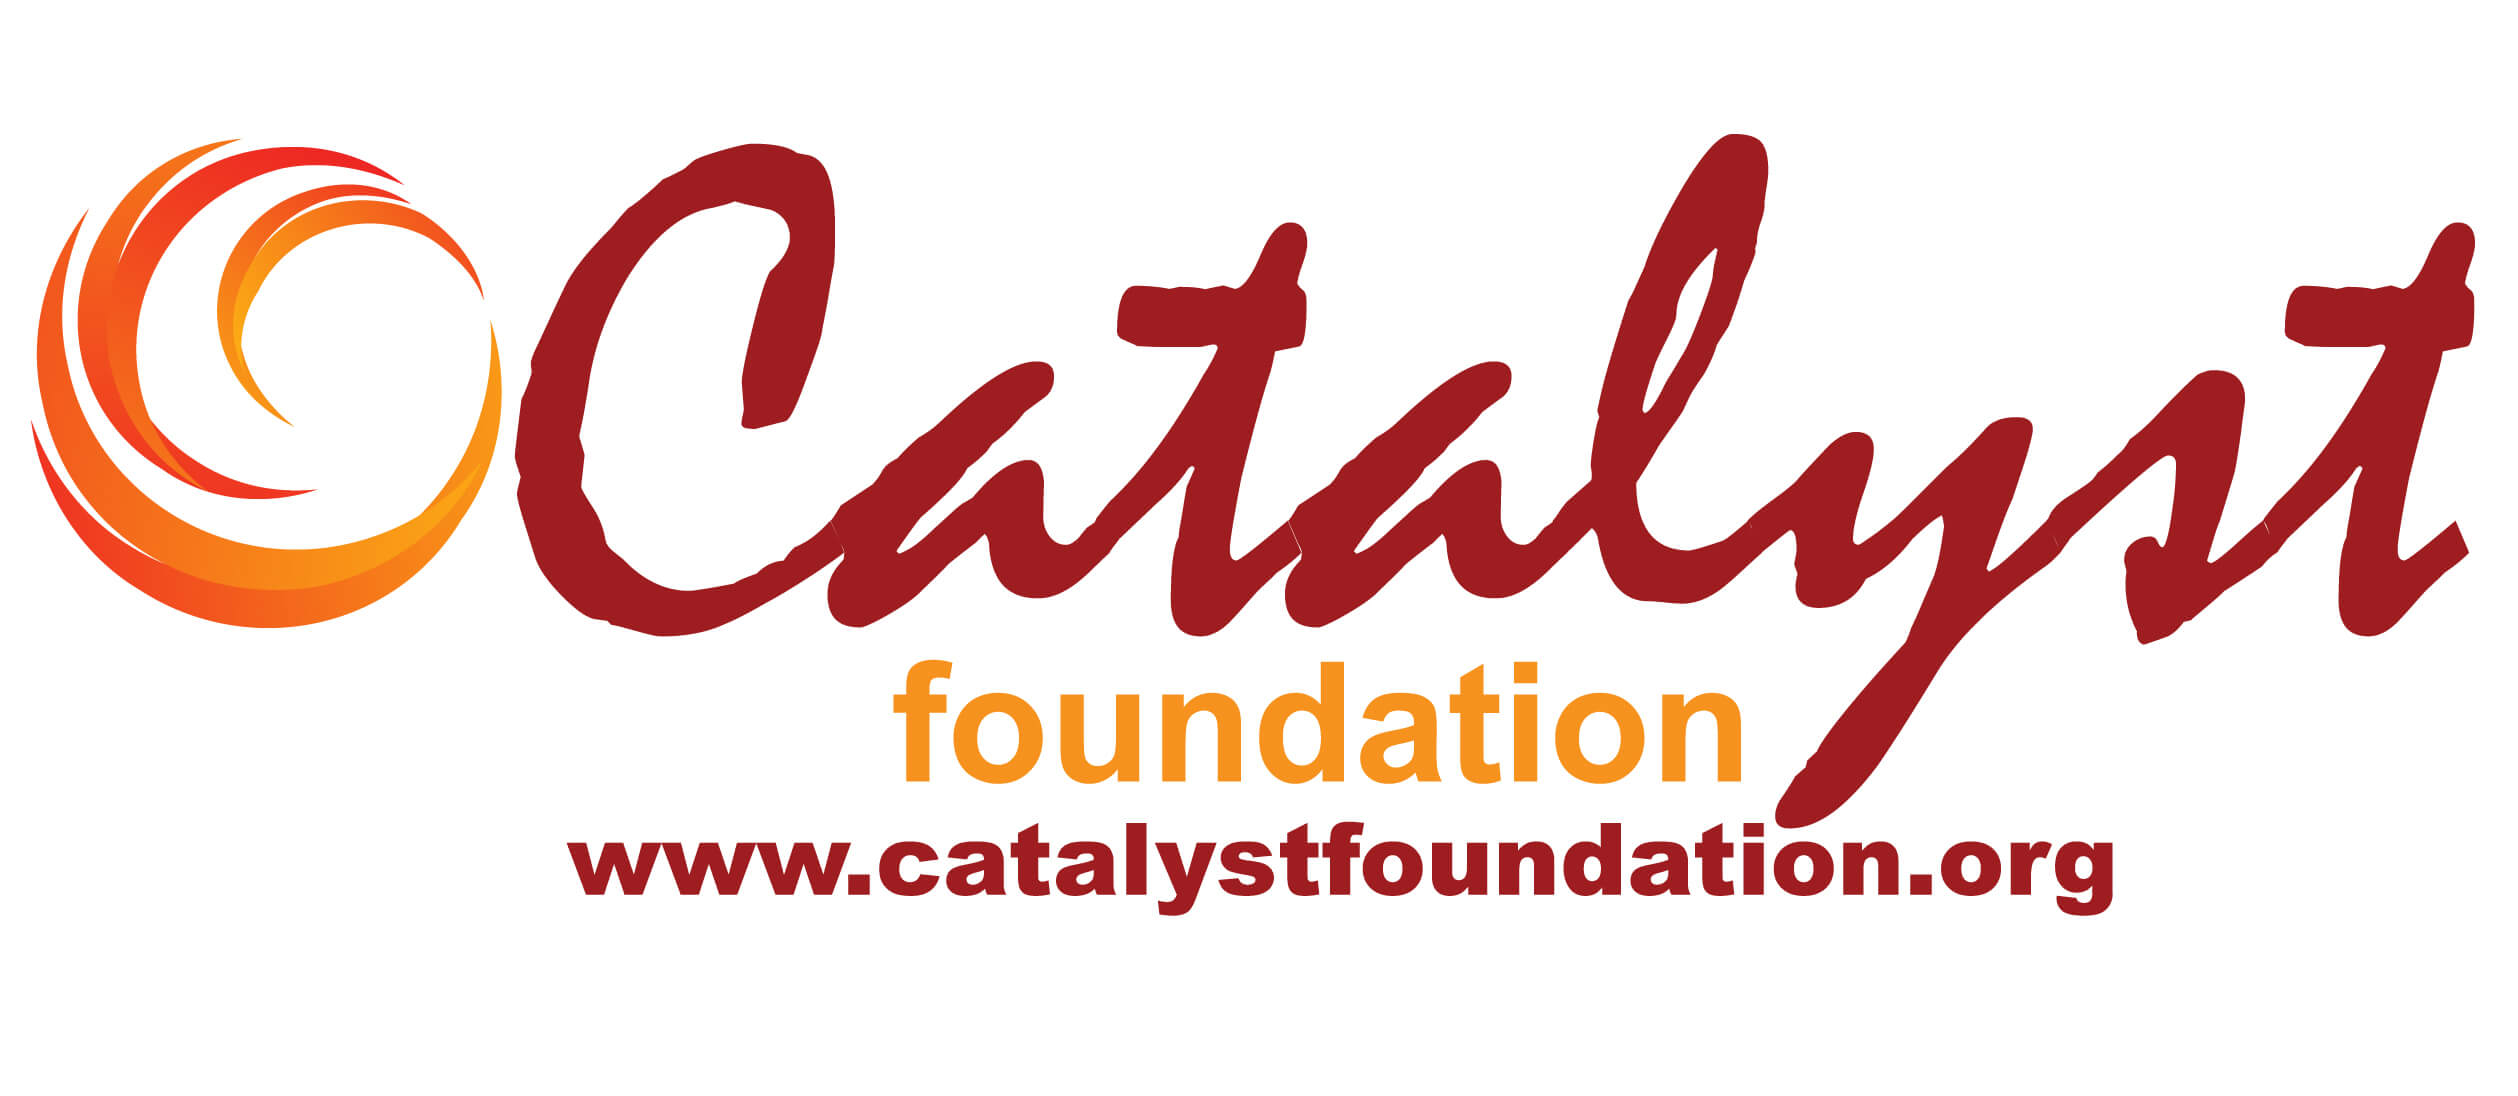 Catalyst Foundation